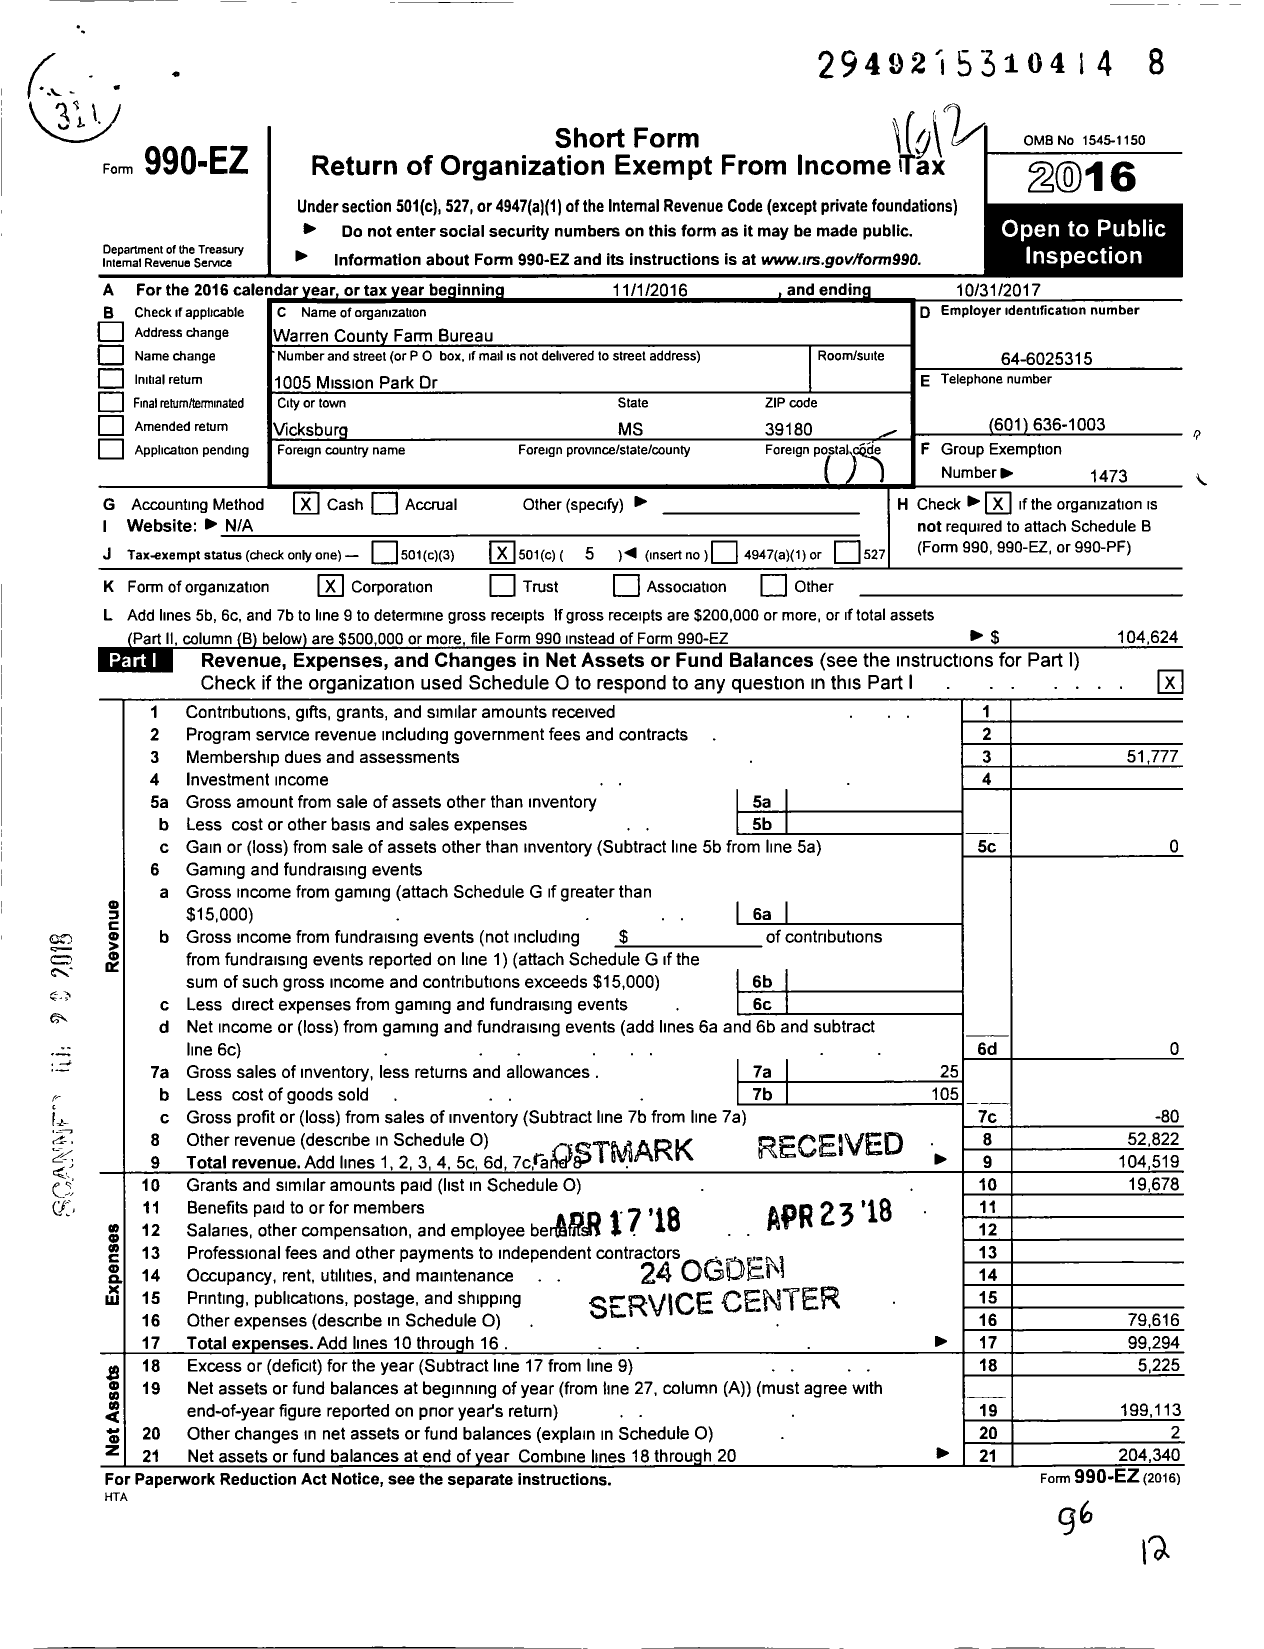 Image of first page of 2016 Form 990EO for Mississippi Farm Bureau Federation - Warren County Farm Bureau